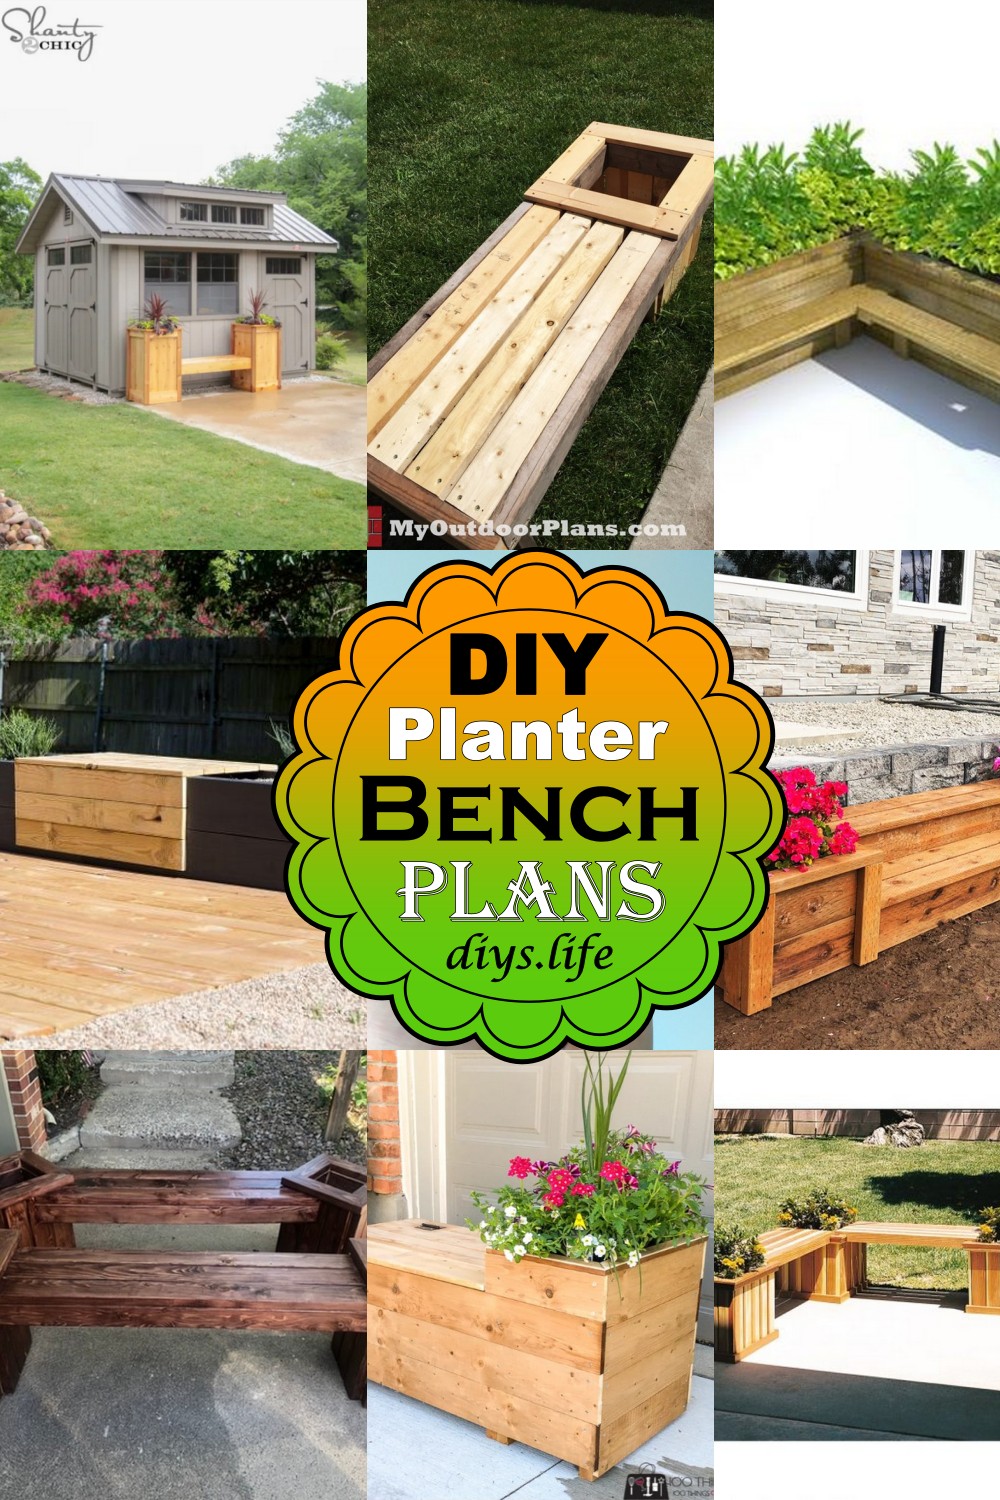 DIY Planter Bench Plans